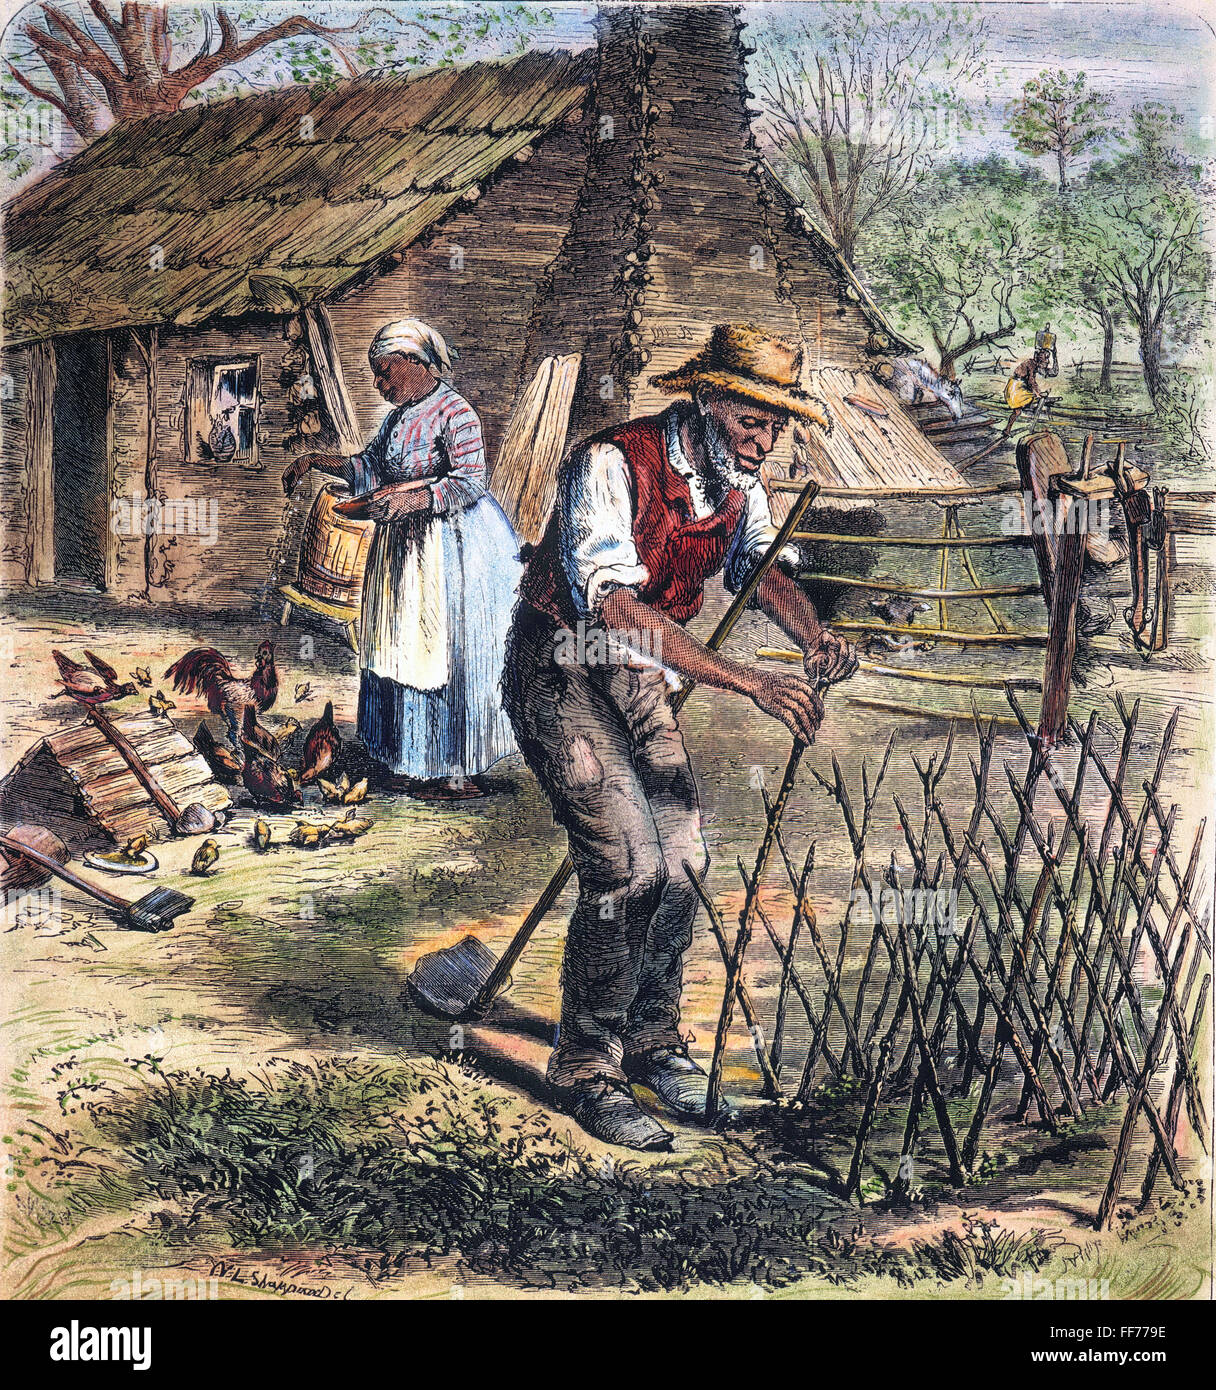 SCHWARZE PÄCHTER, 1870. /nBlack Pächter in Südamerika: farbige Gravur, 1870. Stockfoto